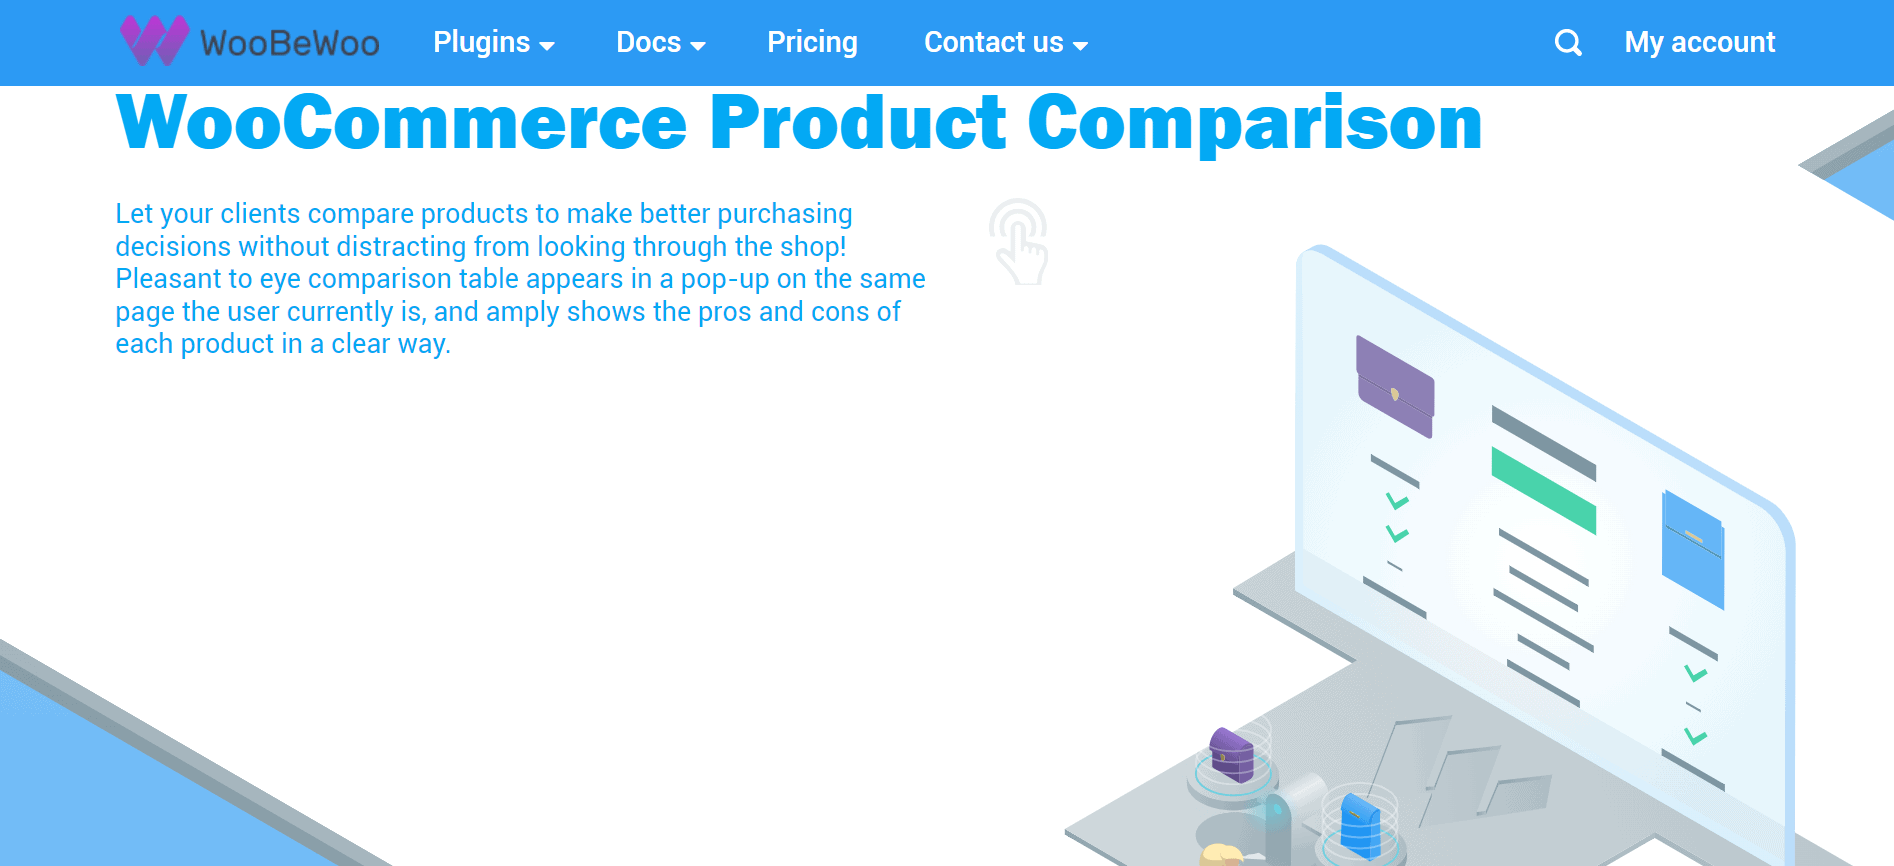 WooBeWoo’s WooCommerce Product Comparison: